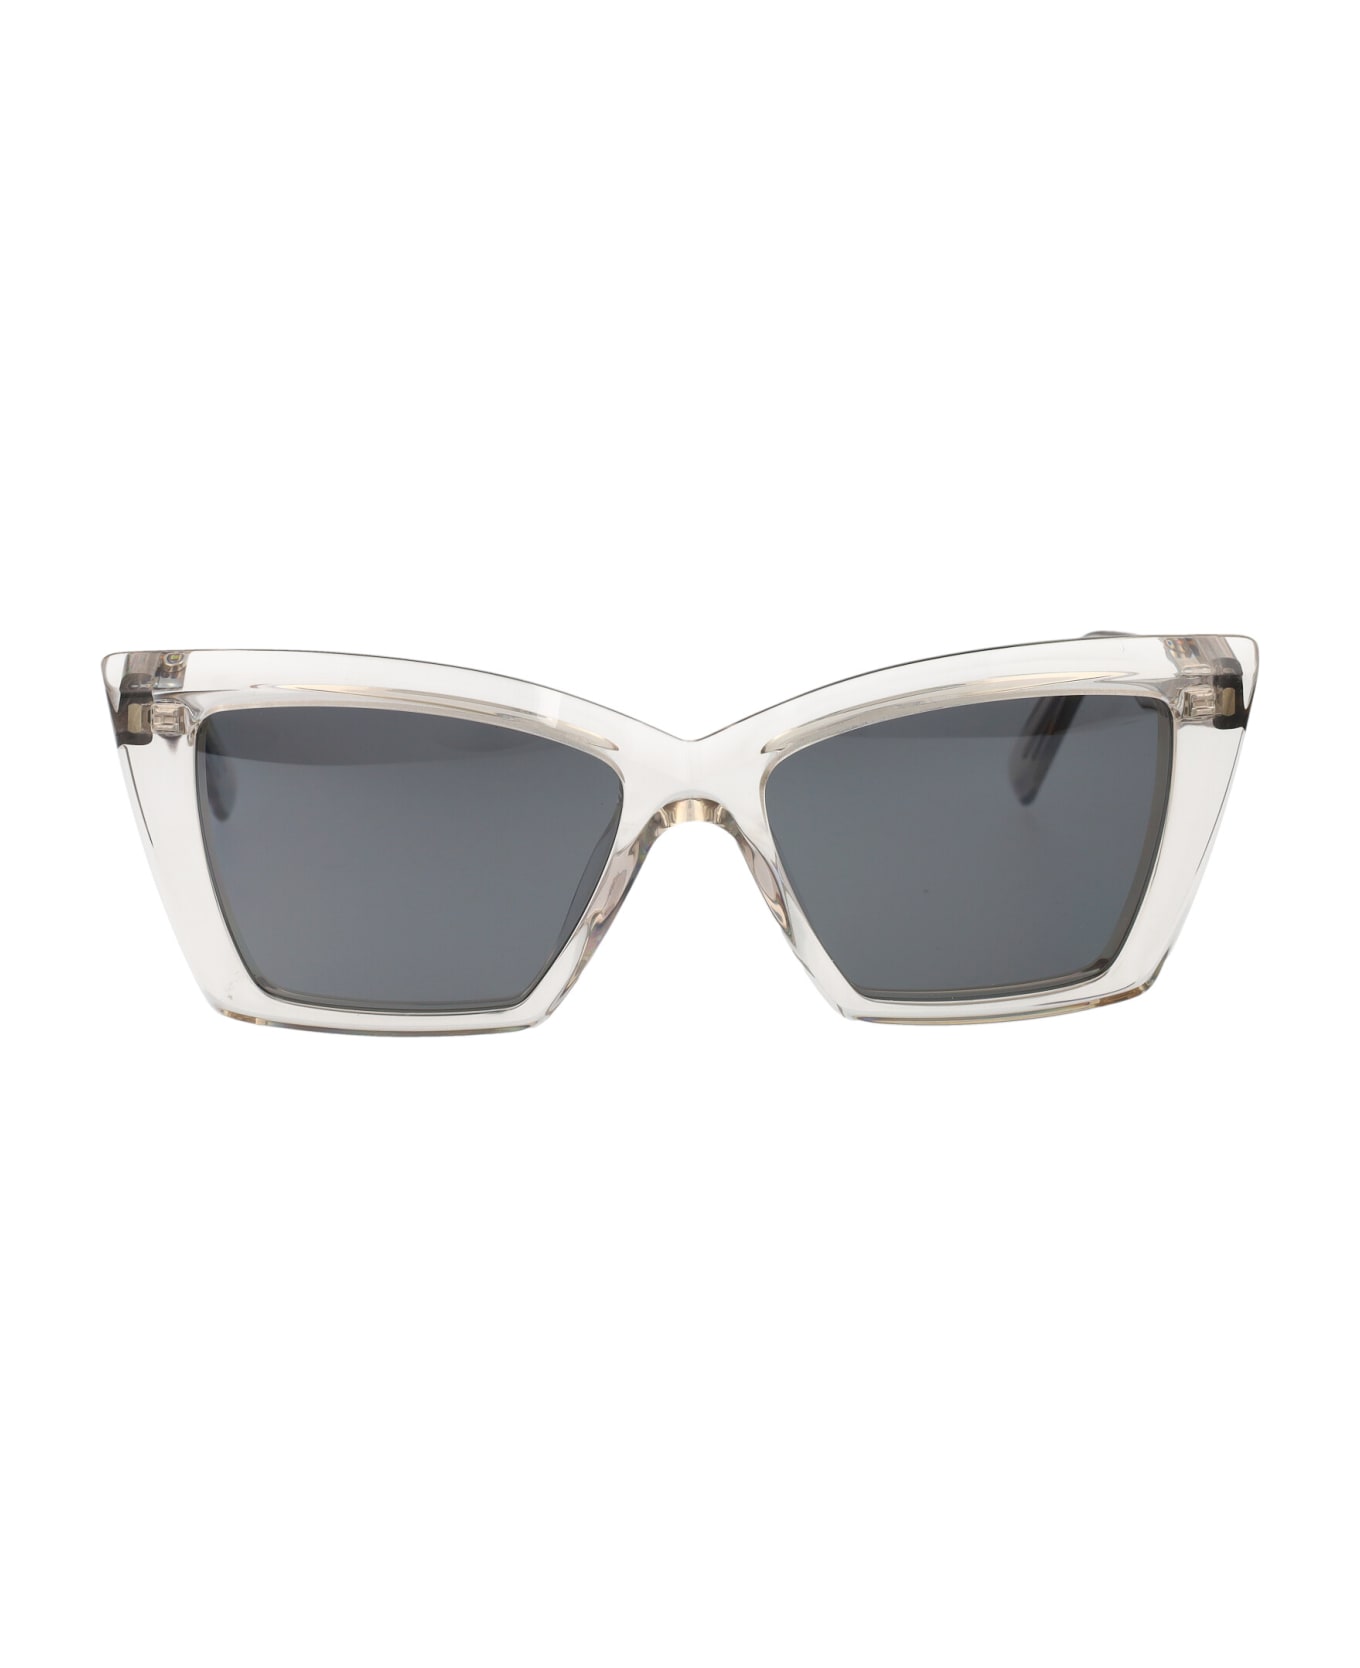 Saint Laurent Eyewear Sl 657 Sunglasses - 003 BEIGE BEIGE SILVER